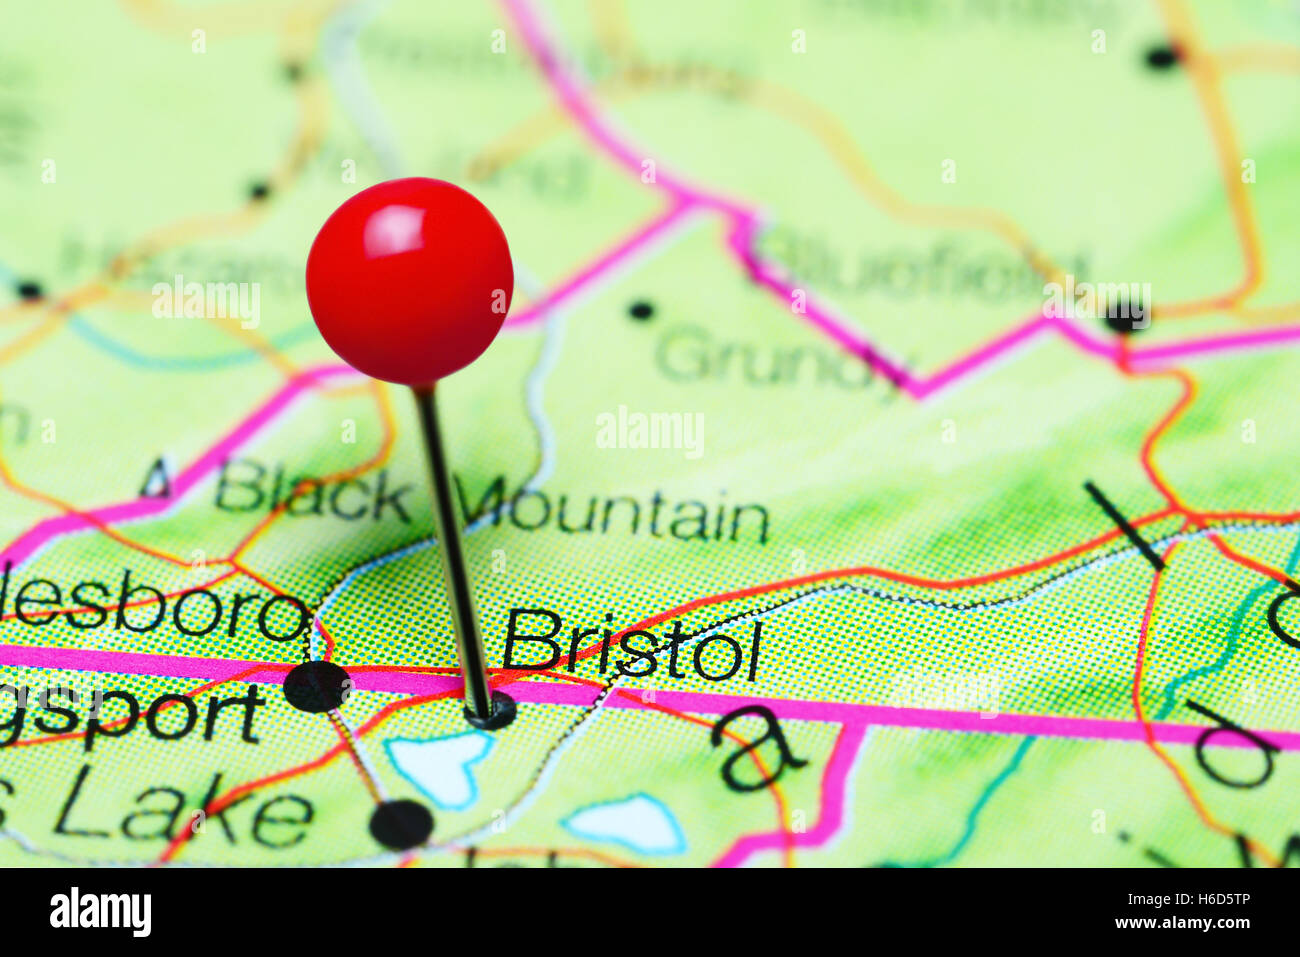 Road Map of Bristol, England Stock Photo - Alamy